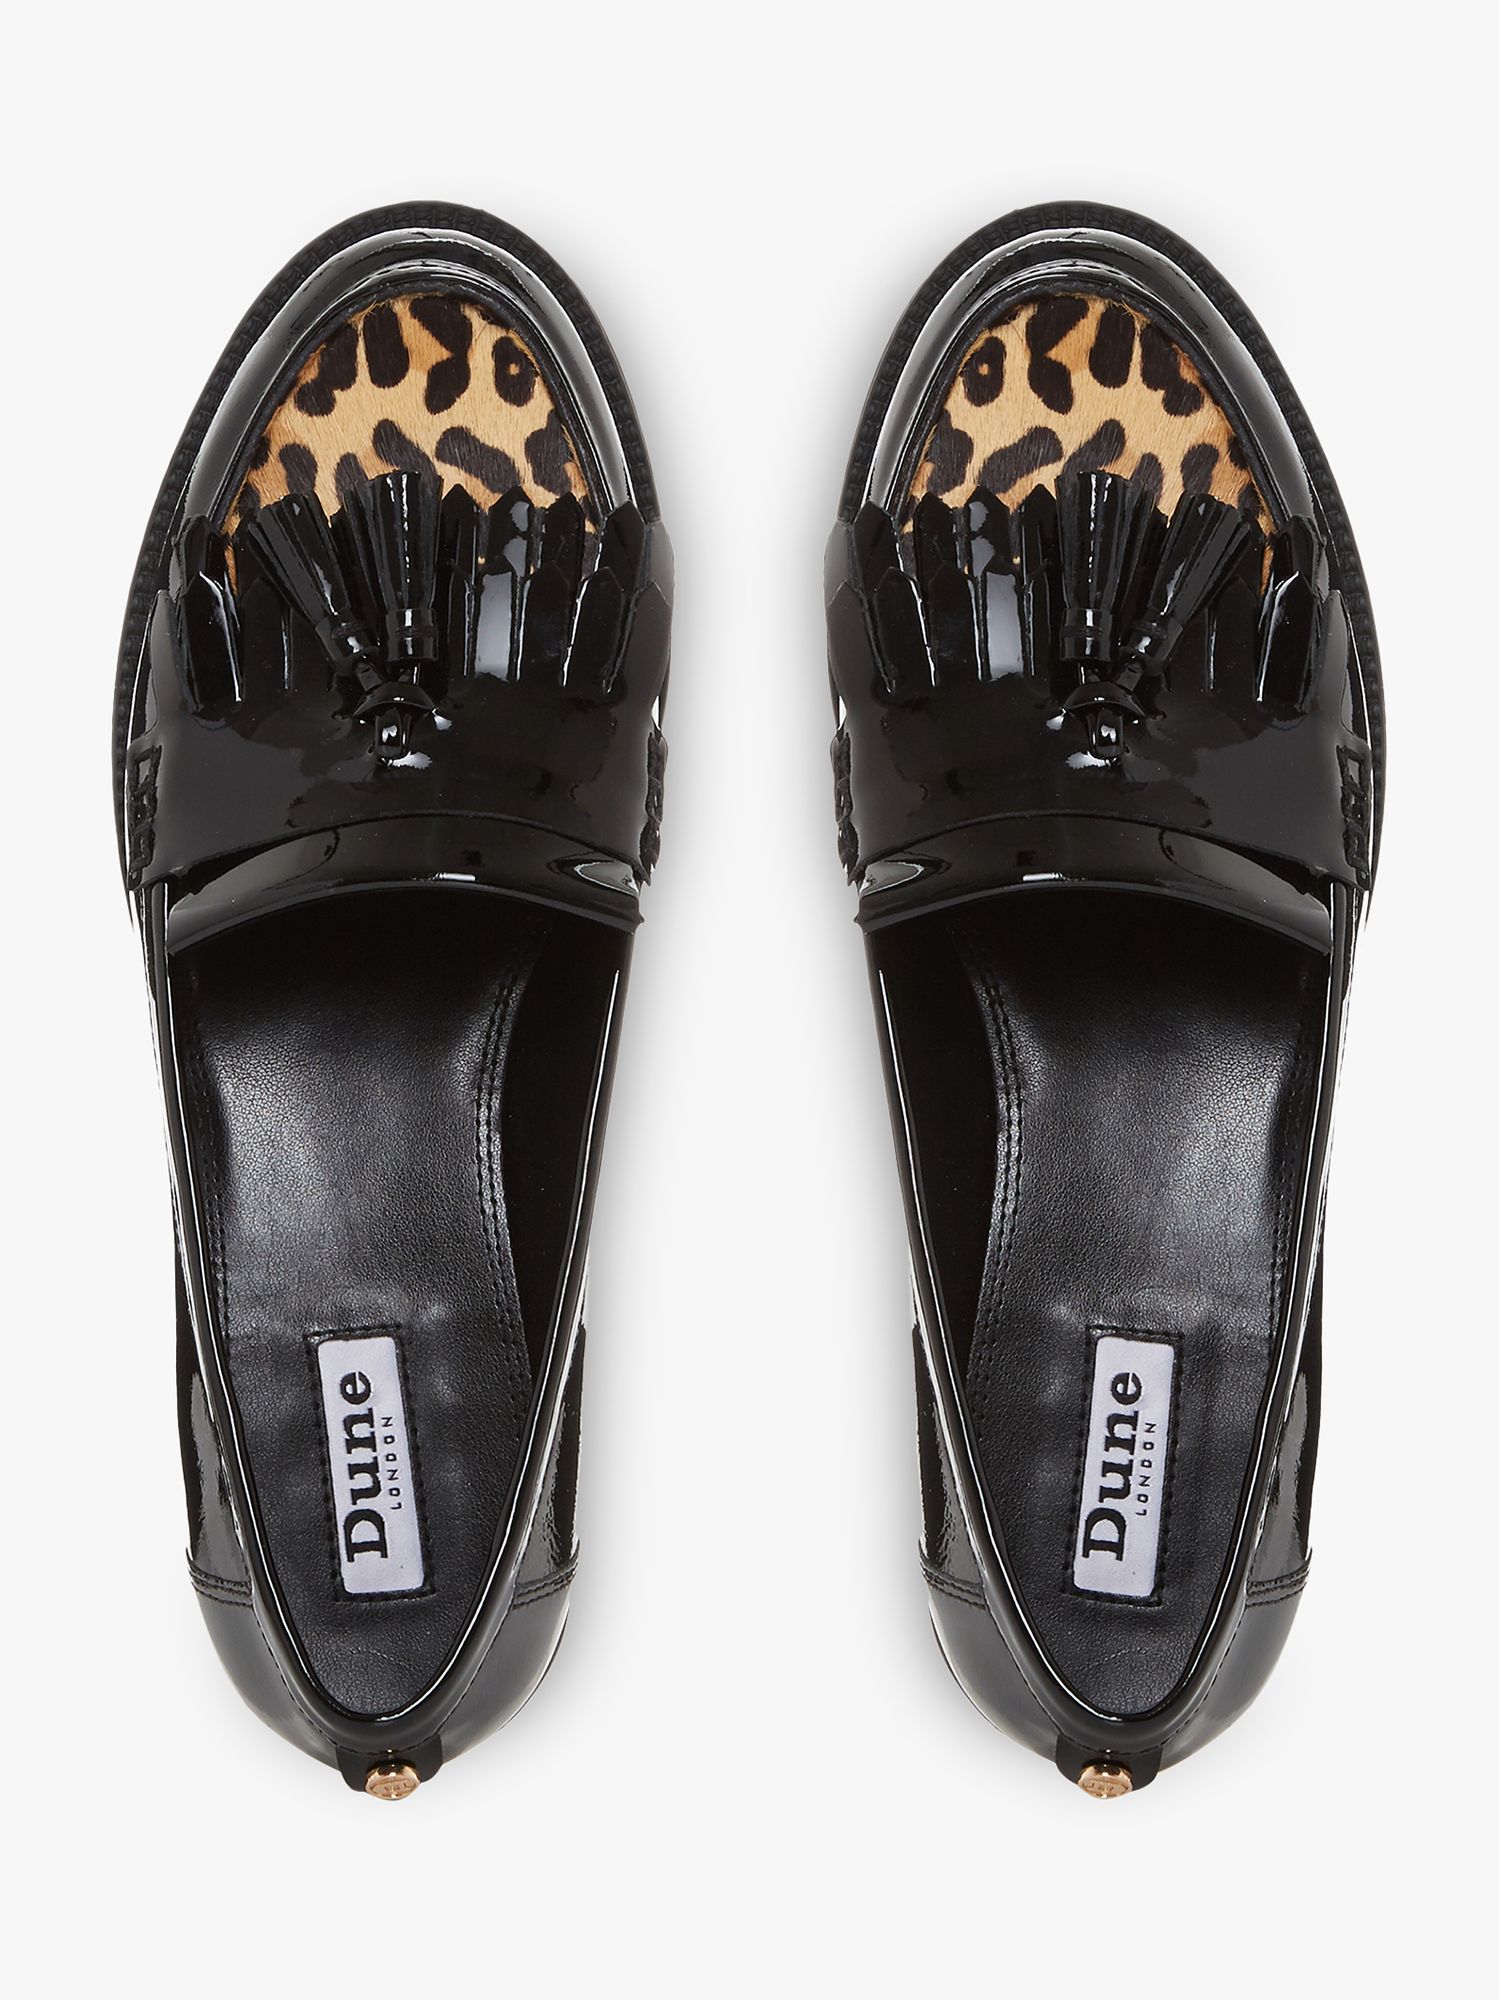 leopard print loafer shoes